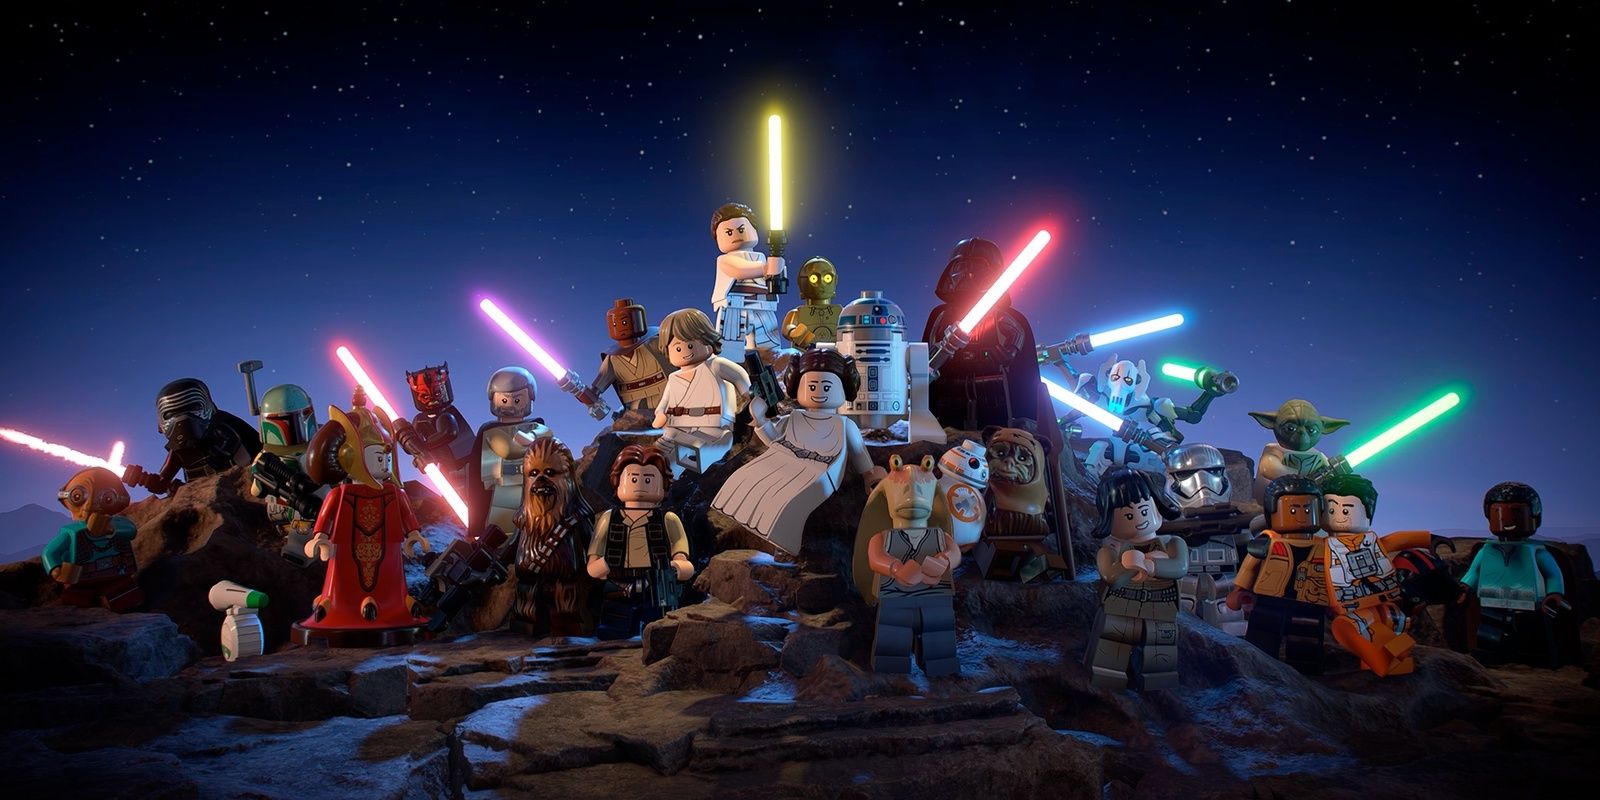 Star Wars Characters in Lego Star Wars The Skywalker Saga